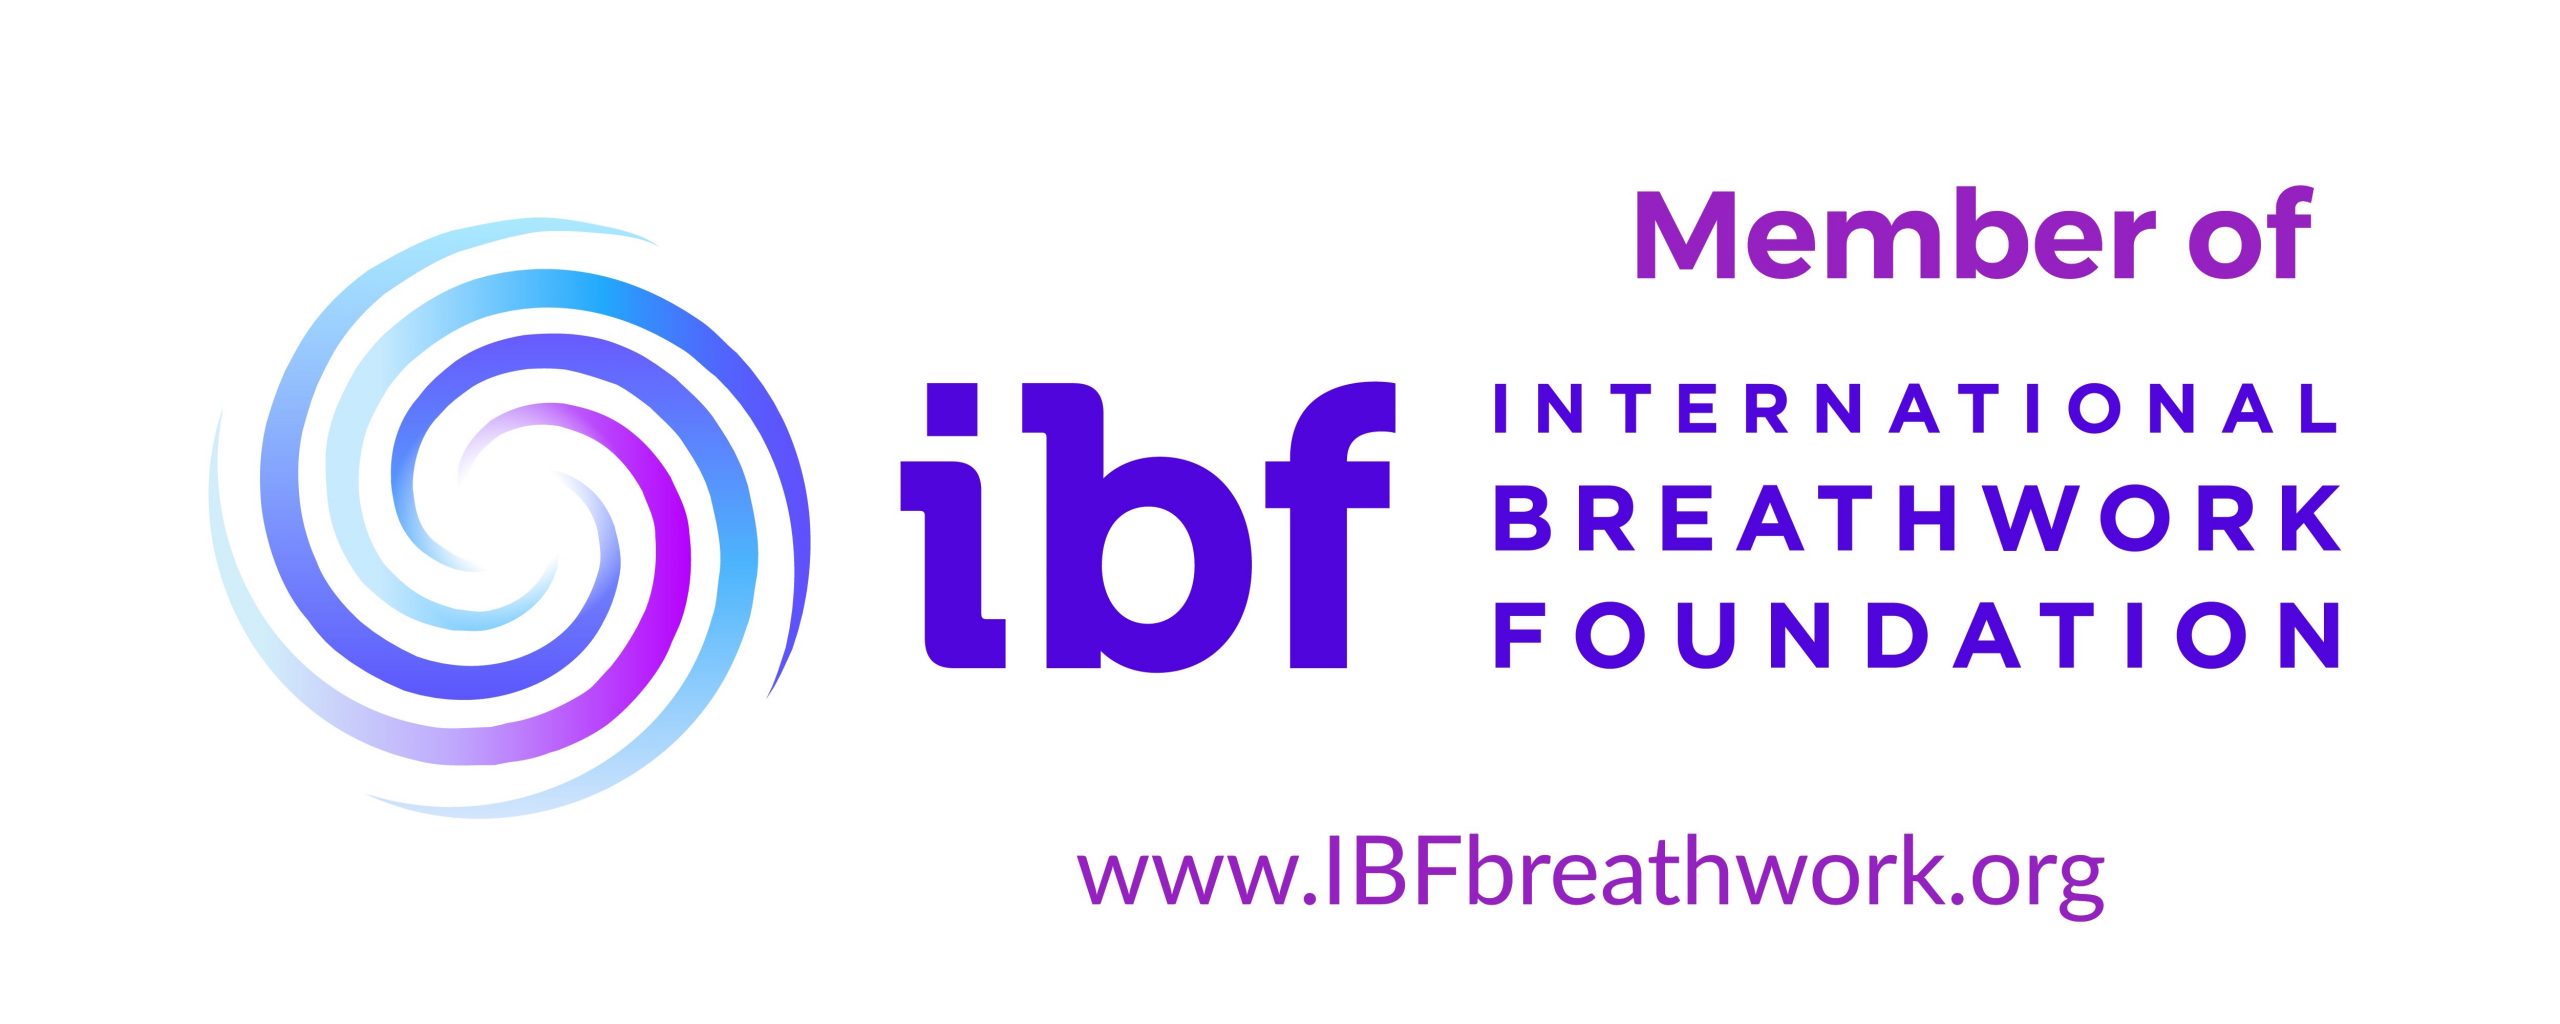 membre de l'internationale breathwork foundation